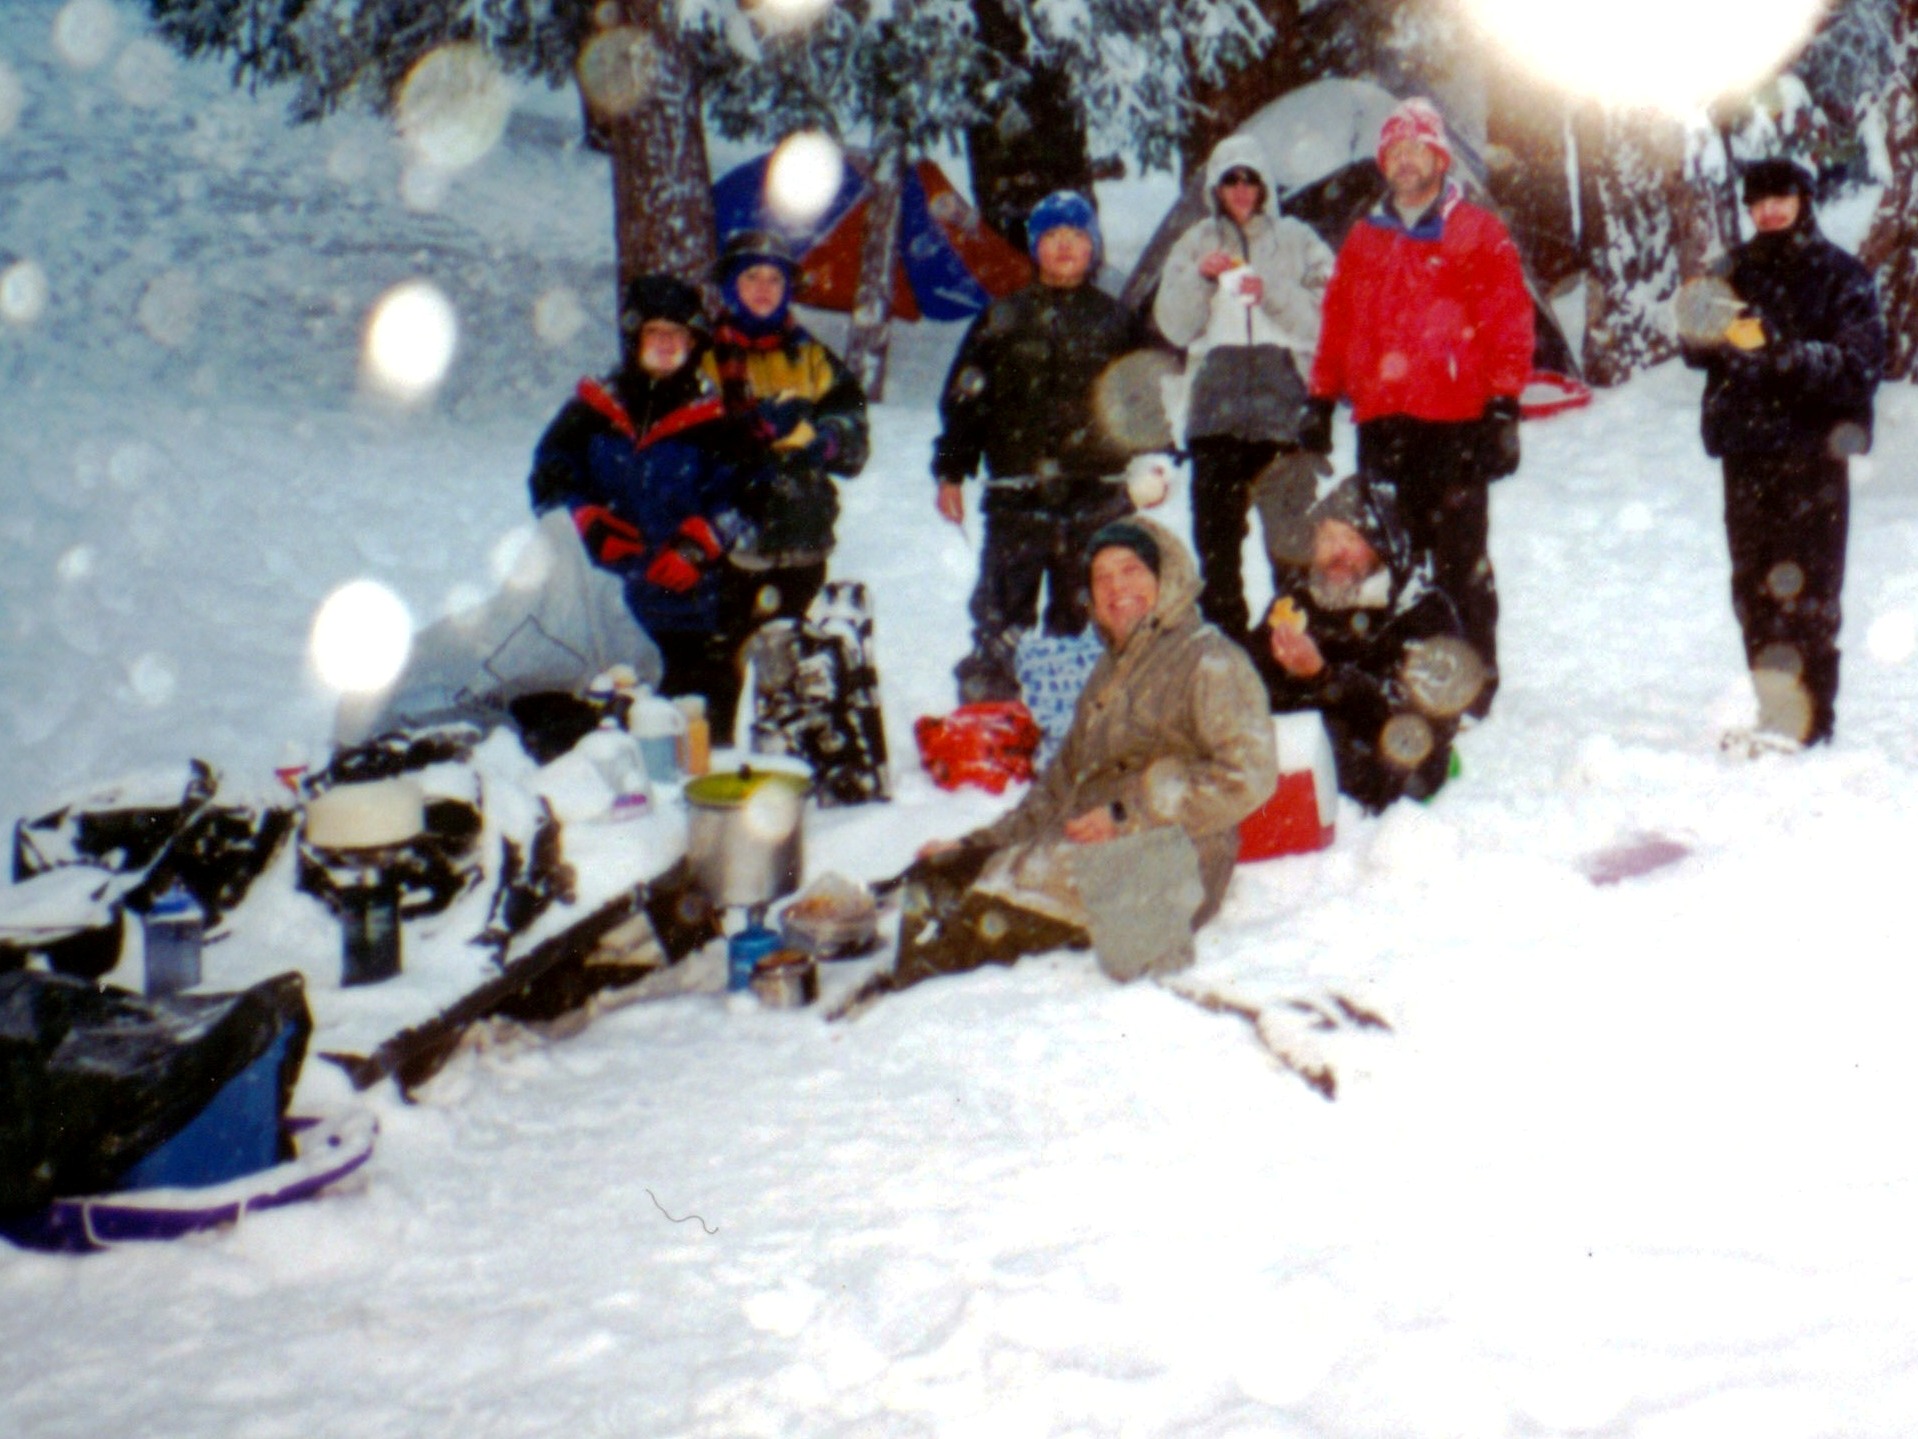 Buckhorn Snow Camping 2000